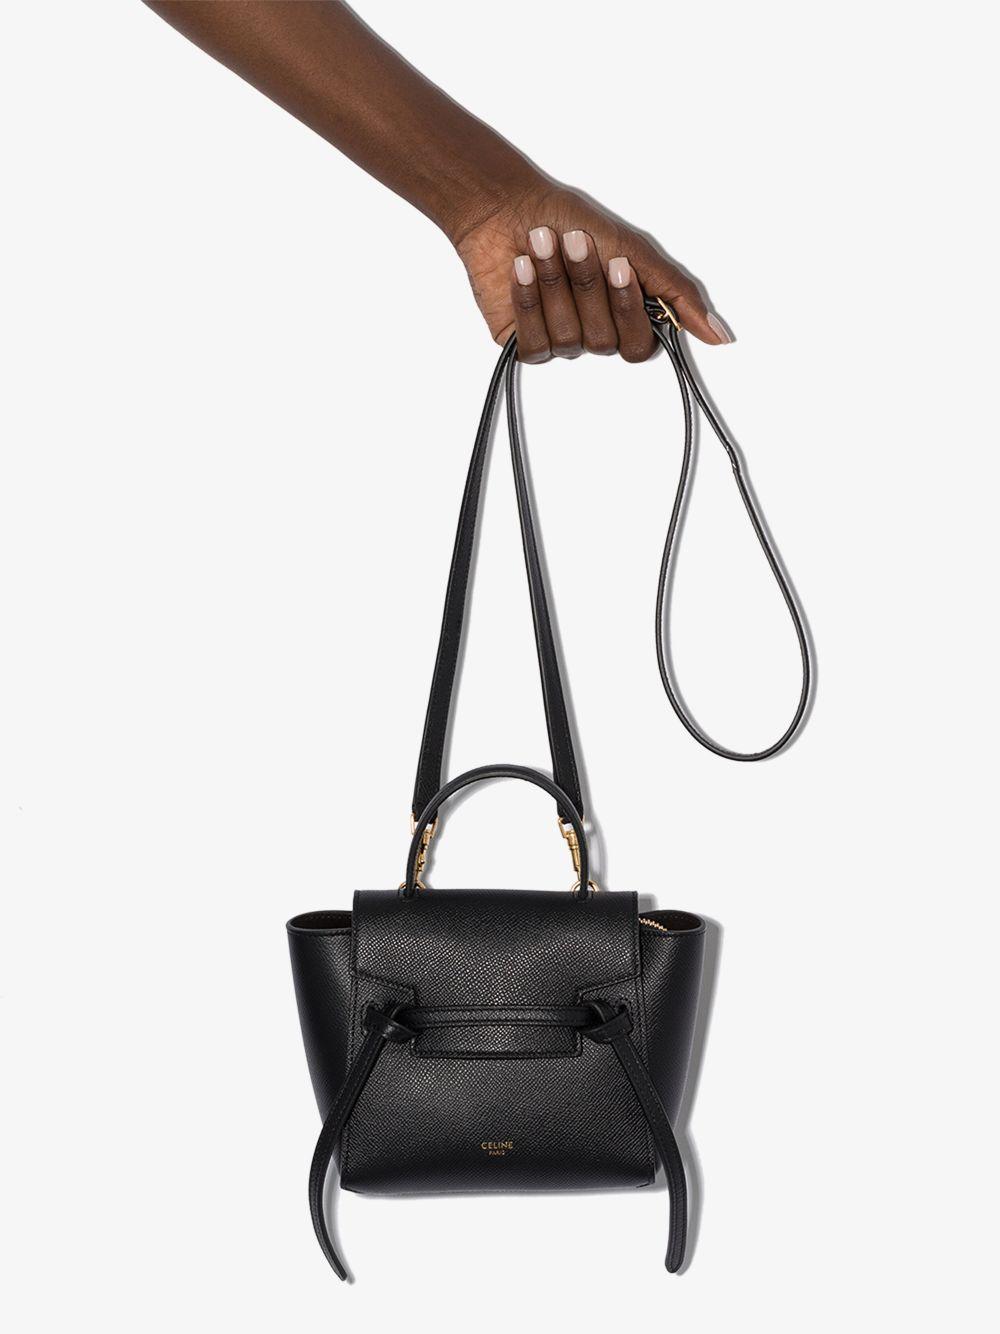 Celine Belt Pico Leather Cross Body Bag in Black | Lyst